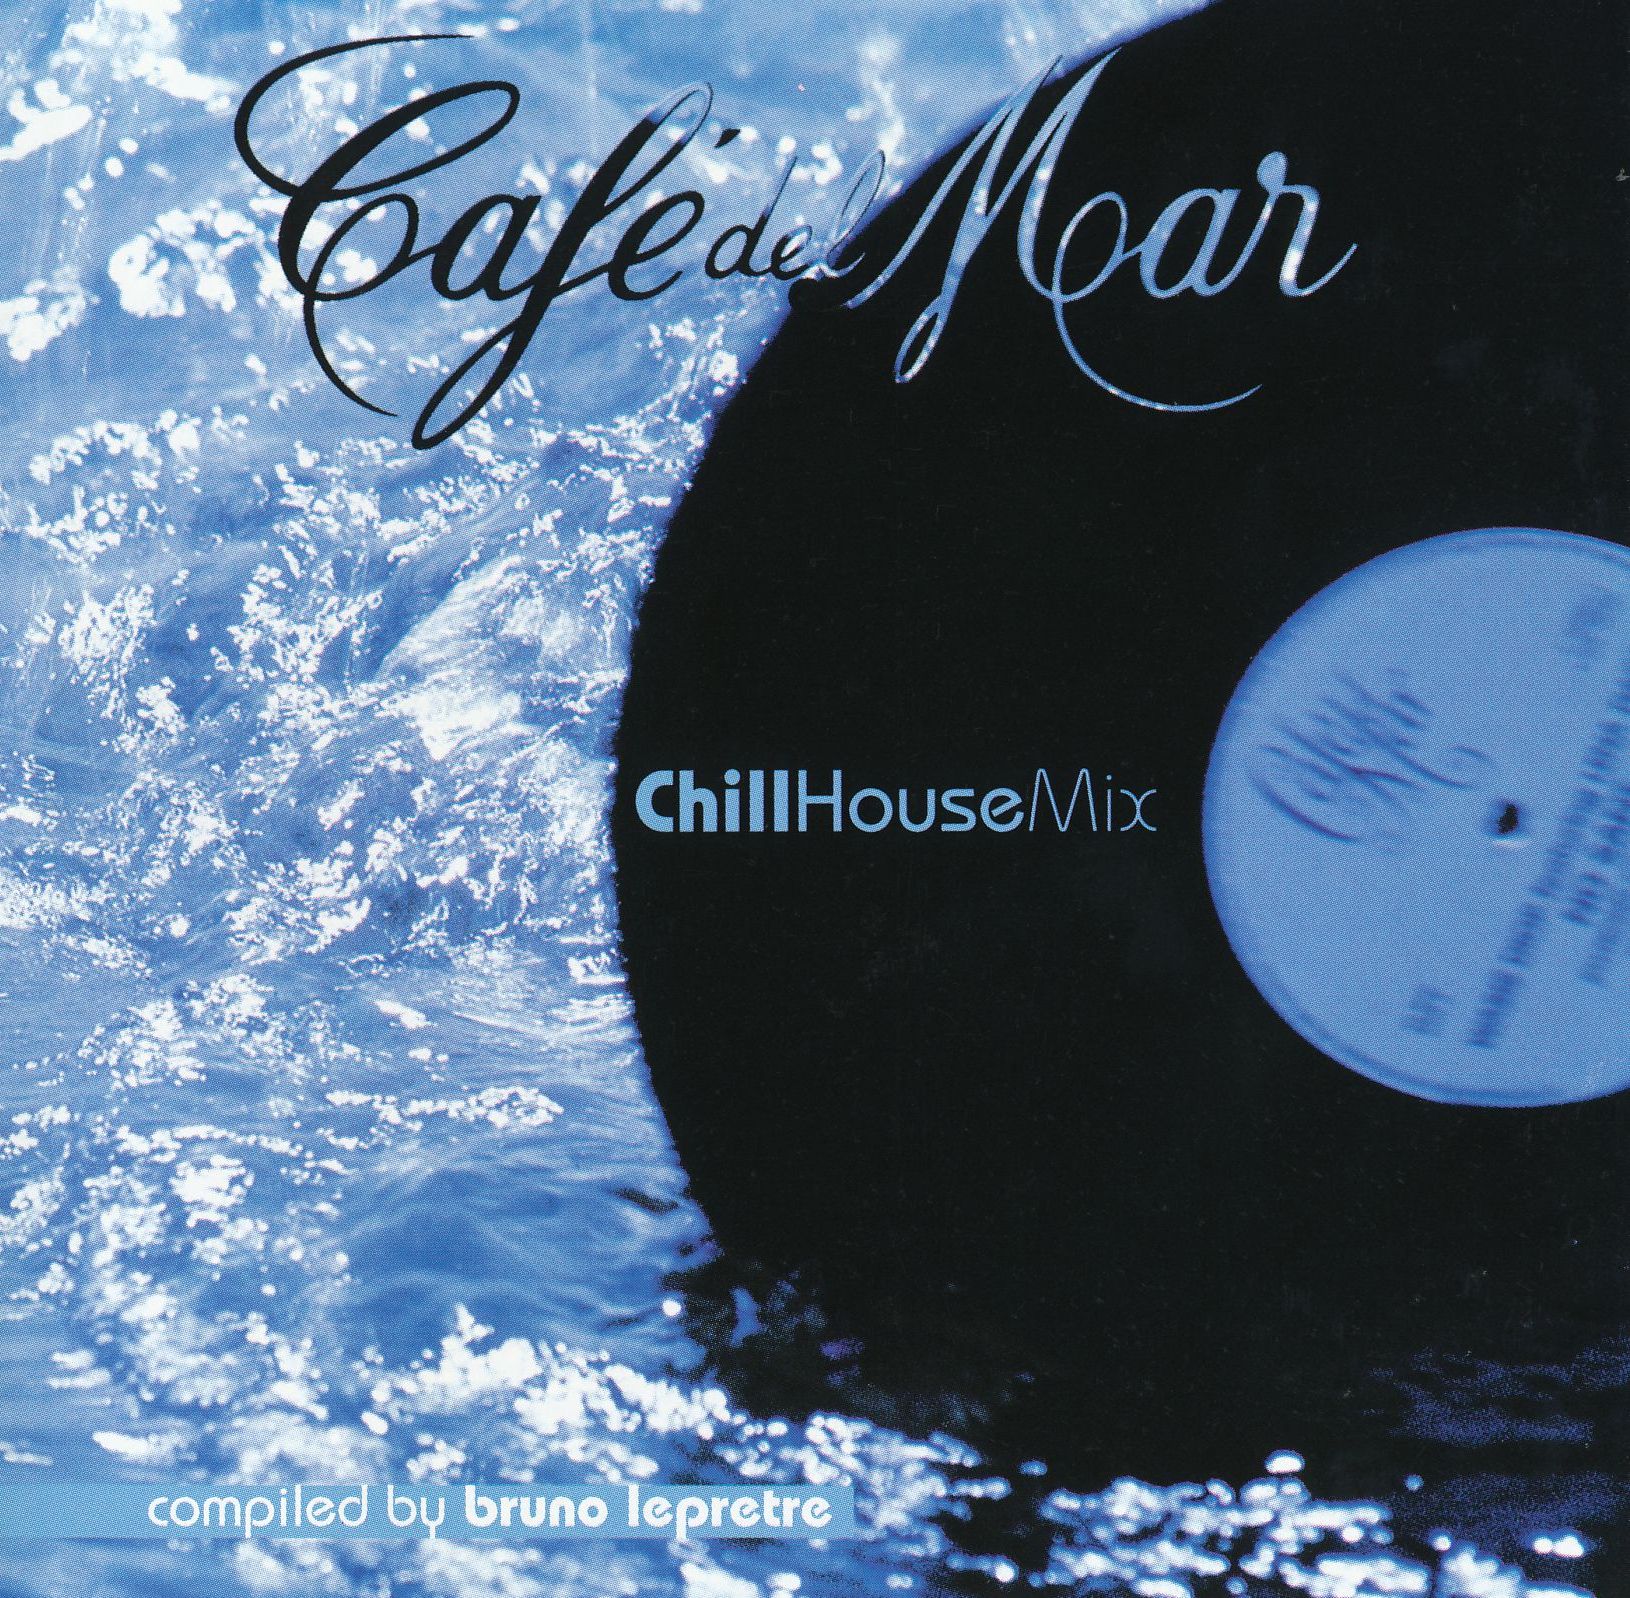 Release “Café del Mar: ChillHouse Mix” by Bruno Lepretre - MusicBrainz